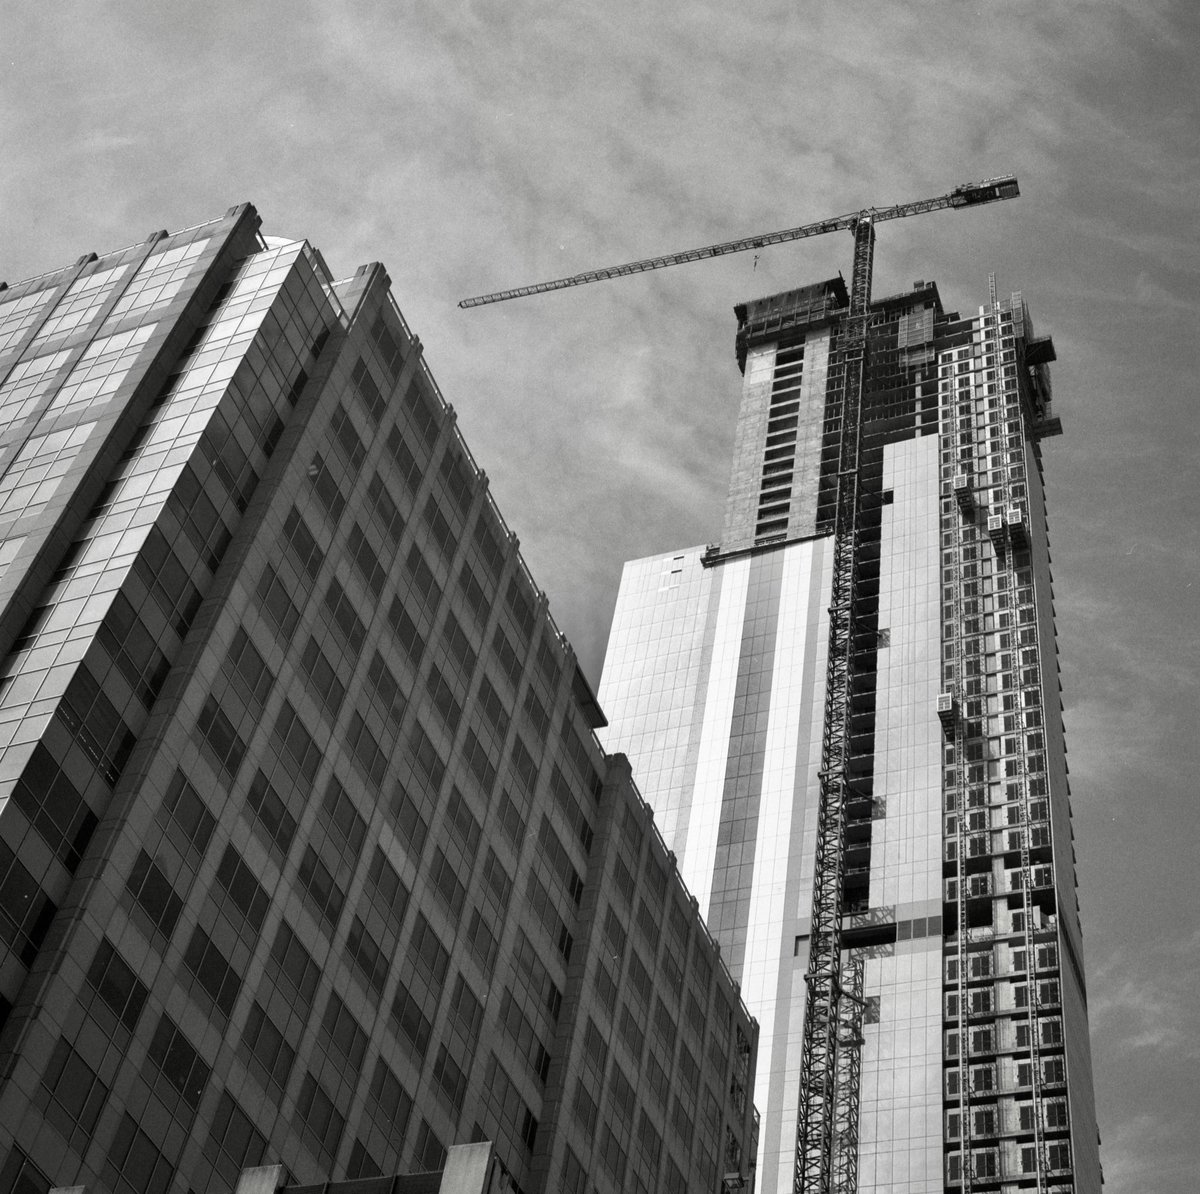 Sixth & Guadalupe Construction • Austin, Texas, USA

Hasselblad 500C • Kodak Tri-X 400 • 2022

#TriX #ATX #film #camera #120film #BWfilm #photography #Austin #Texas #Hasselblad #500C #Sixth #Guadalupe #art #Monochrome #Outdoors #OfficeBuildingExterior #Sky #Skyscraper